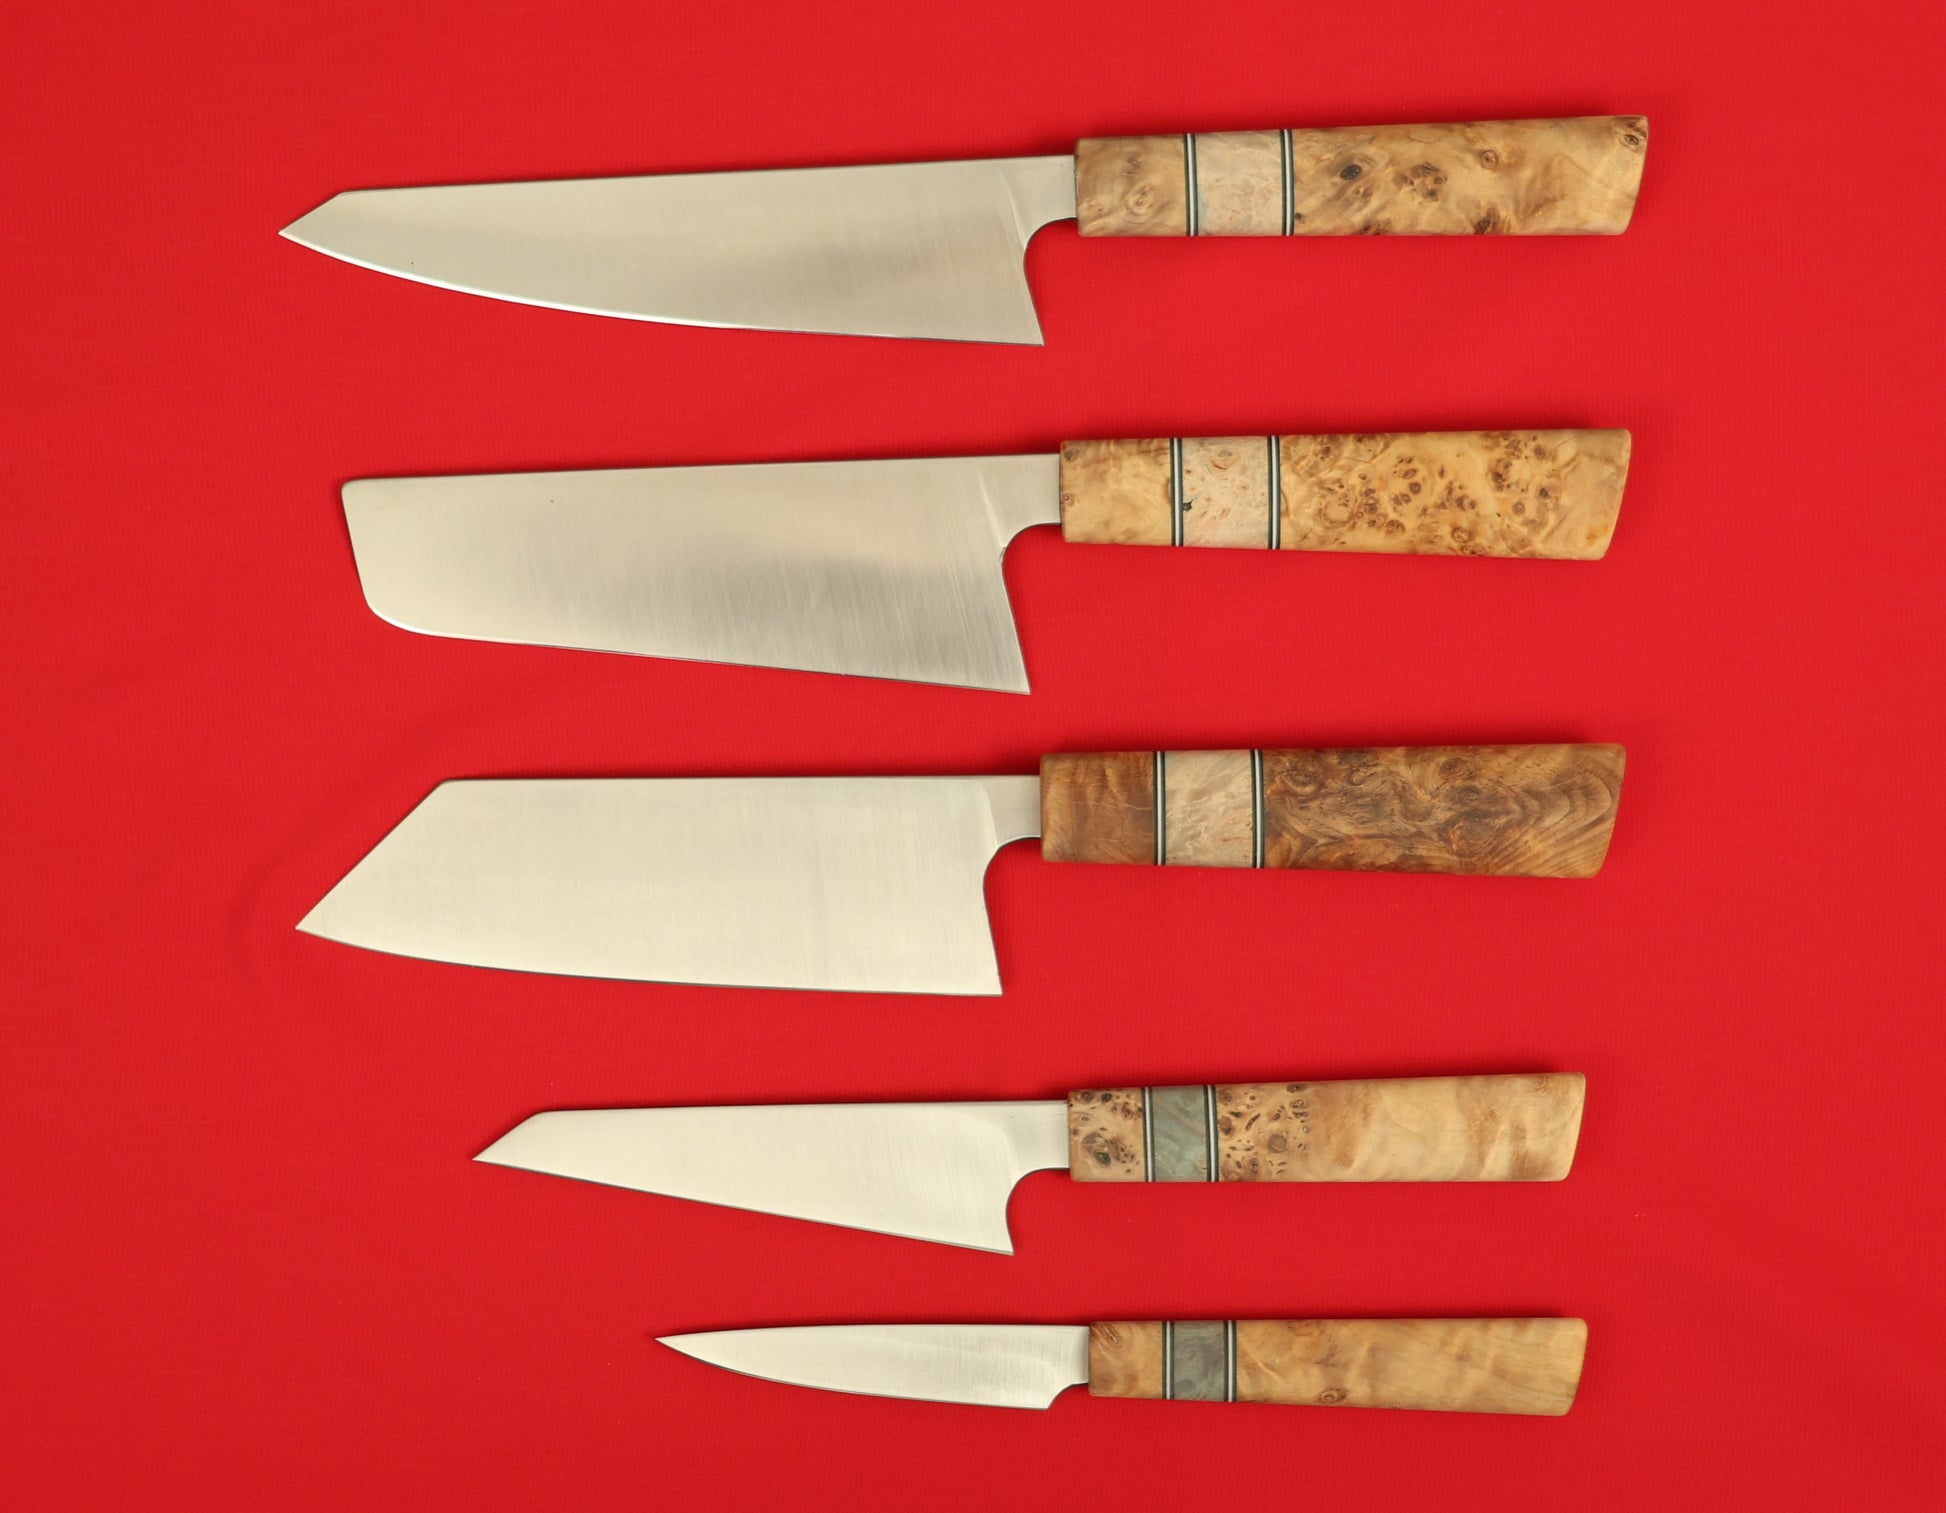 Japanese style kitchen knife set on a red background. Kiritsuke, Nakiri, Bunka, Honesuki and paring knives. 